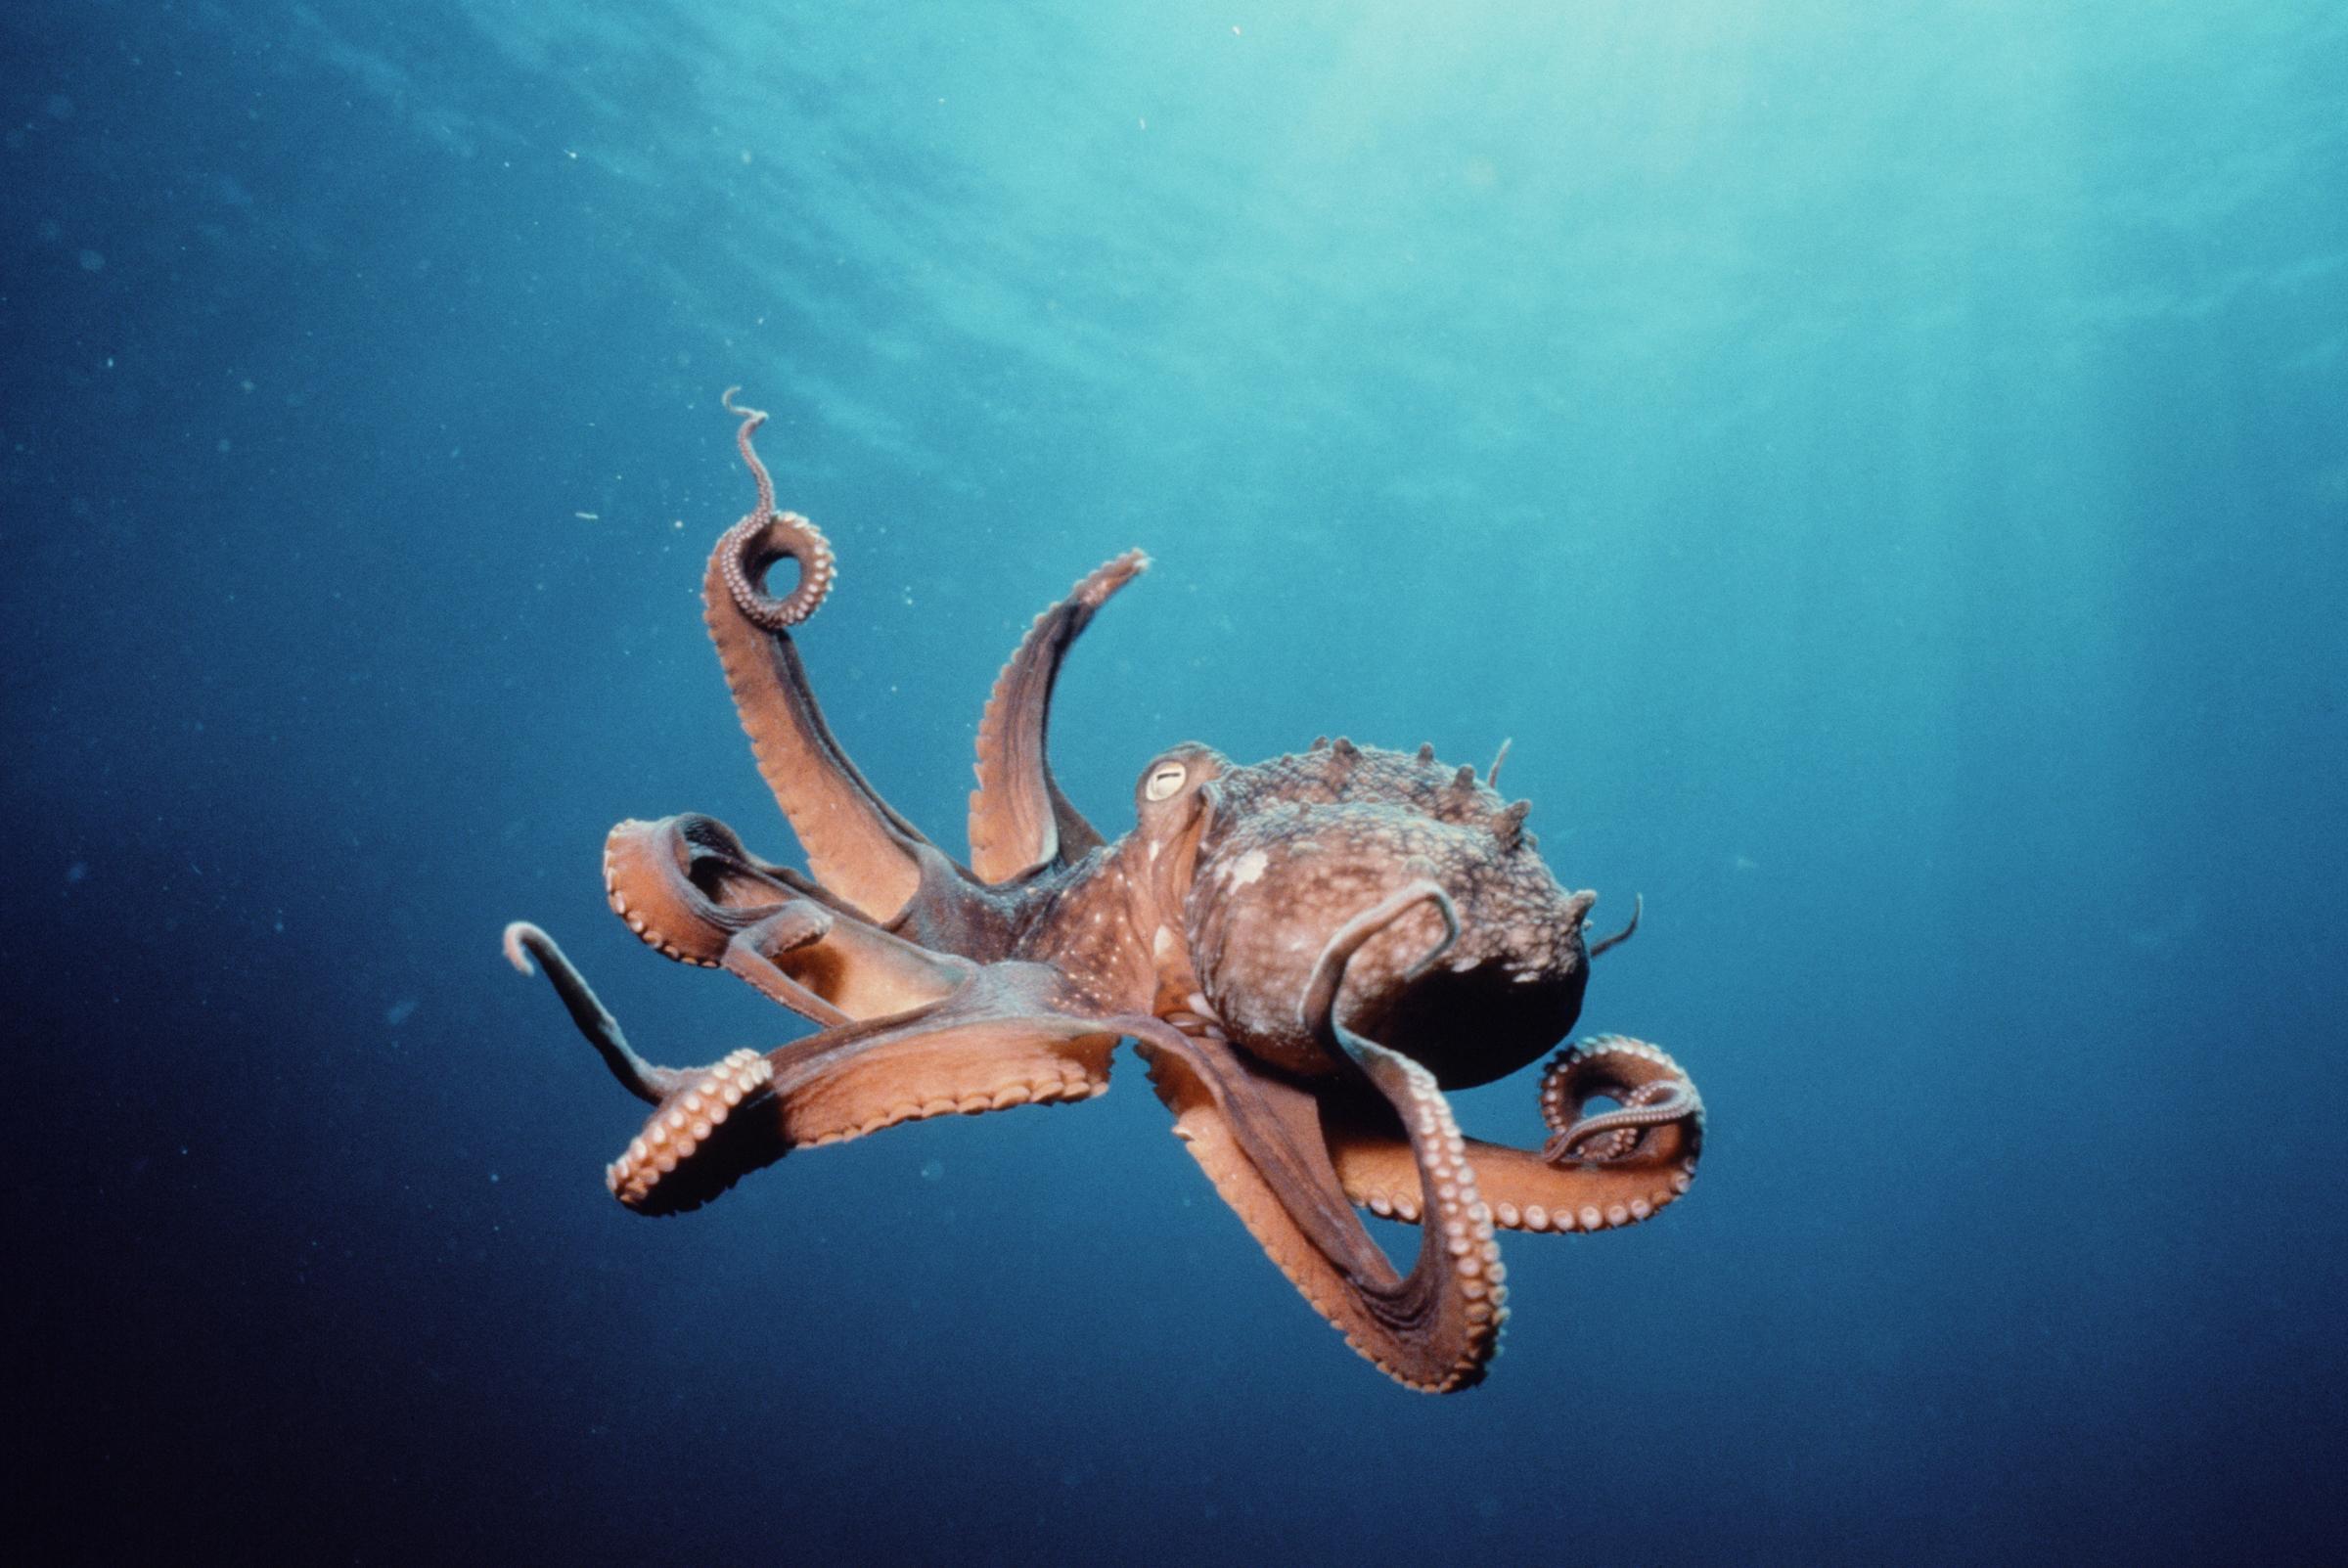 Octopus HD Wallpaper